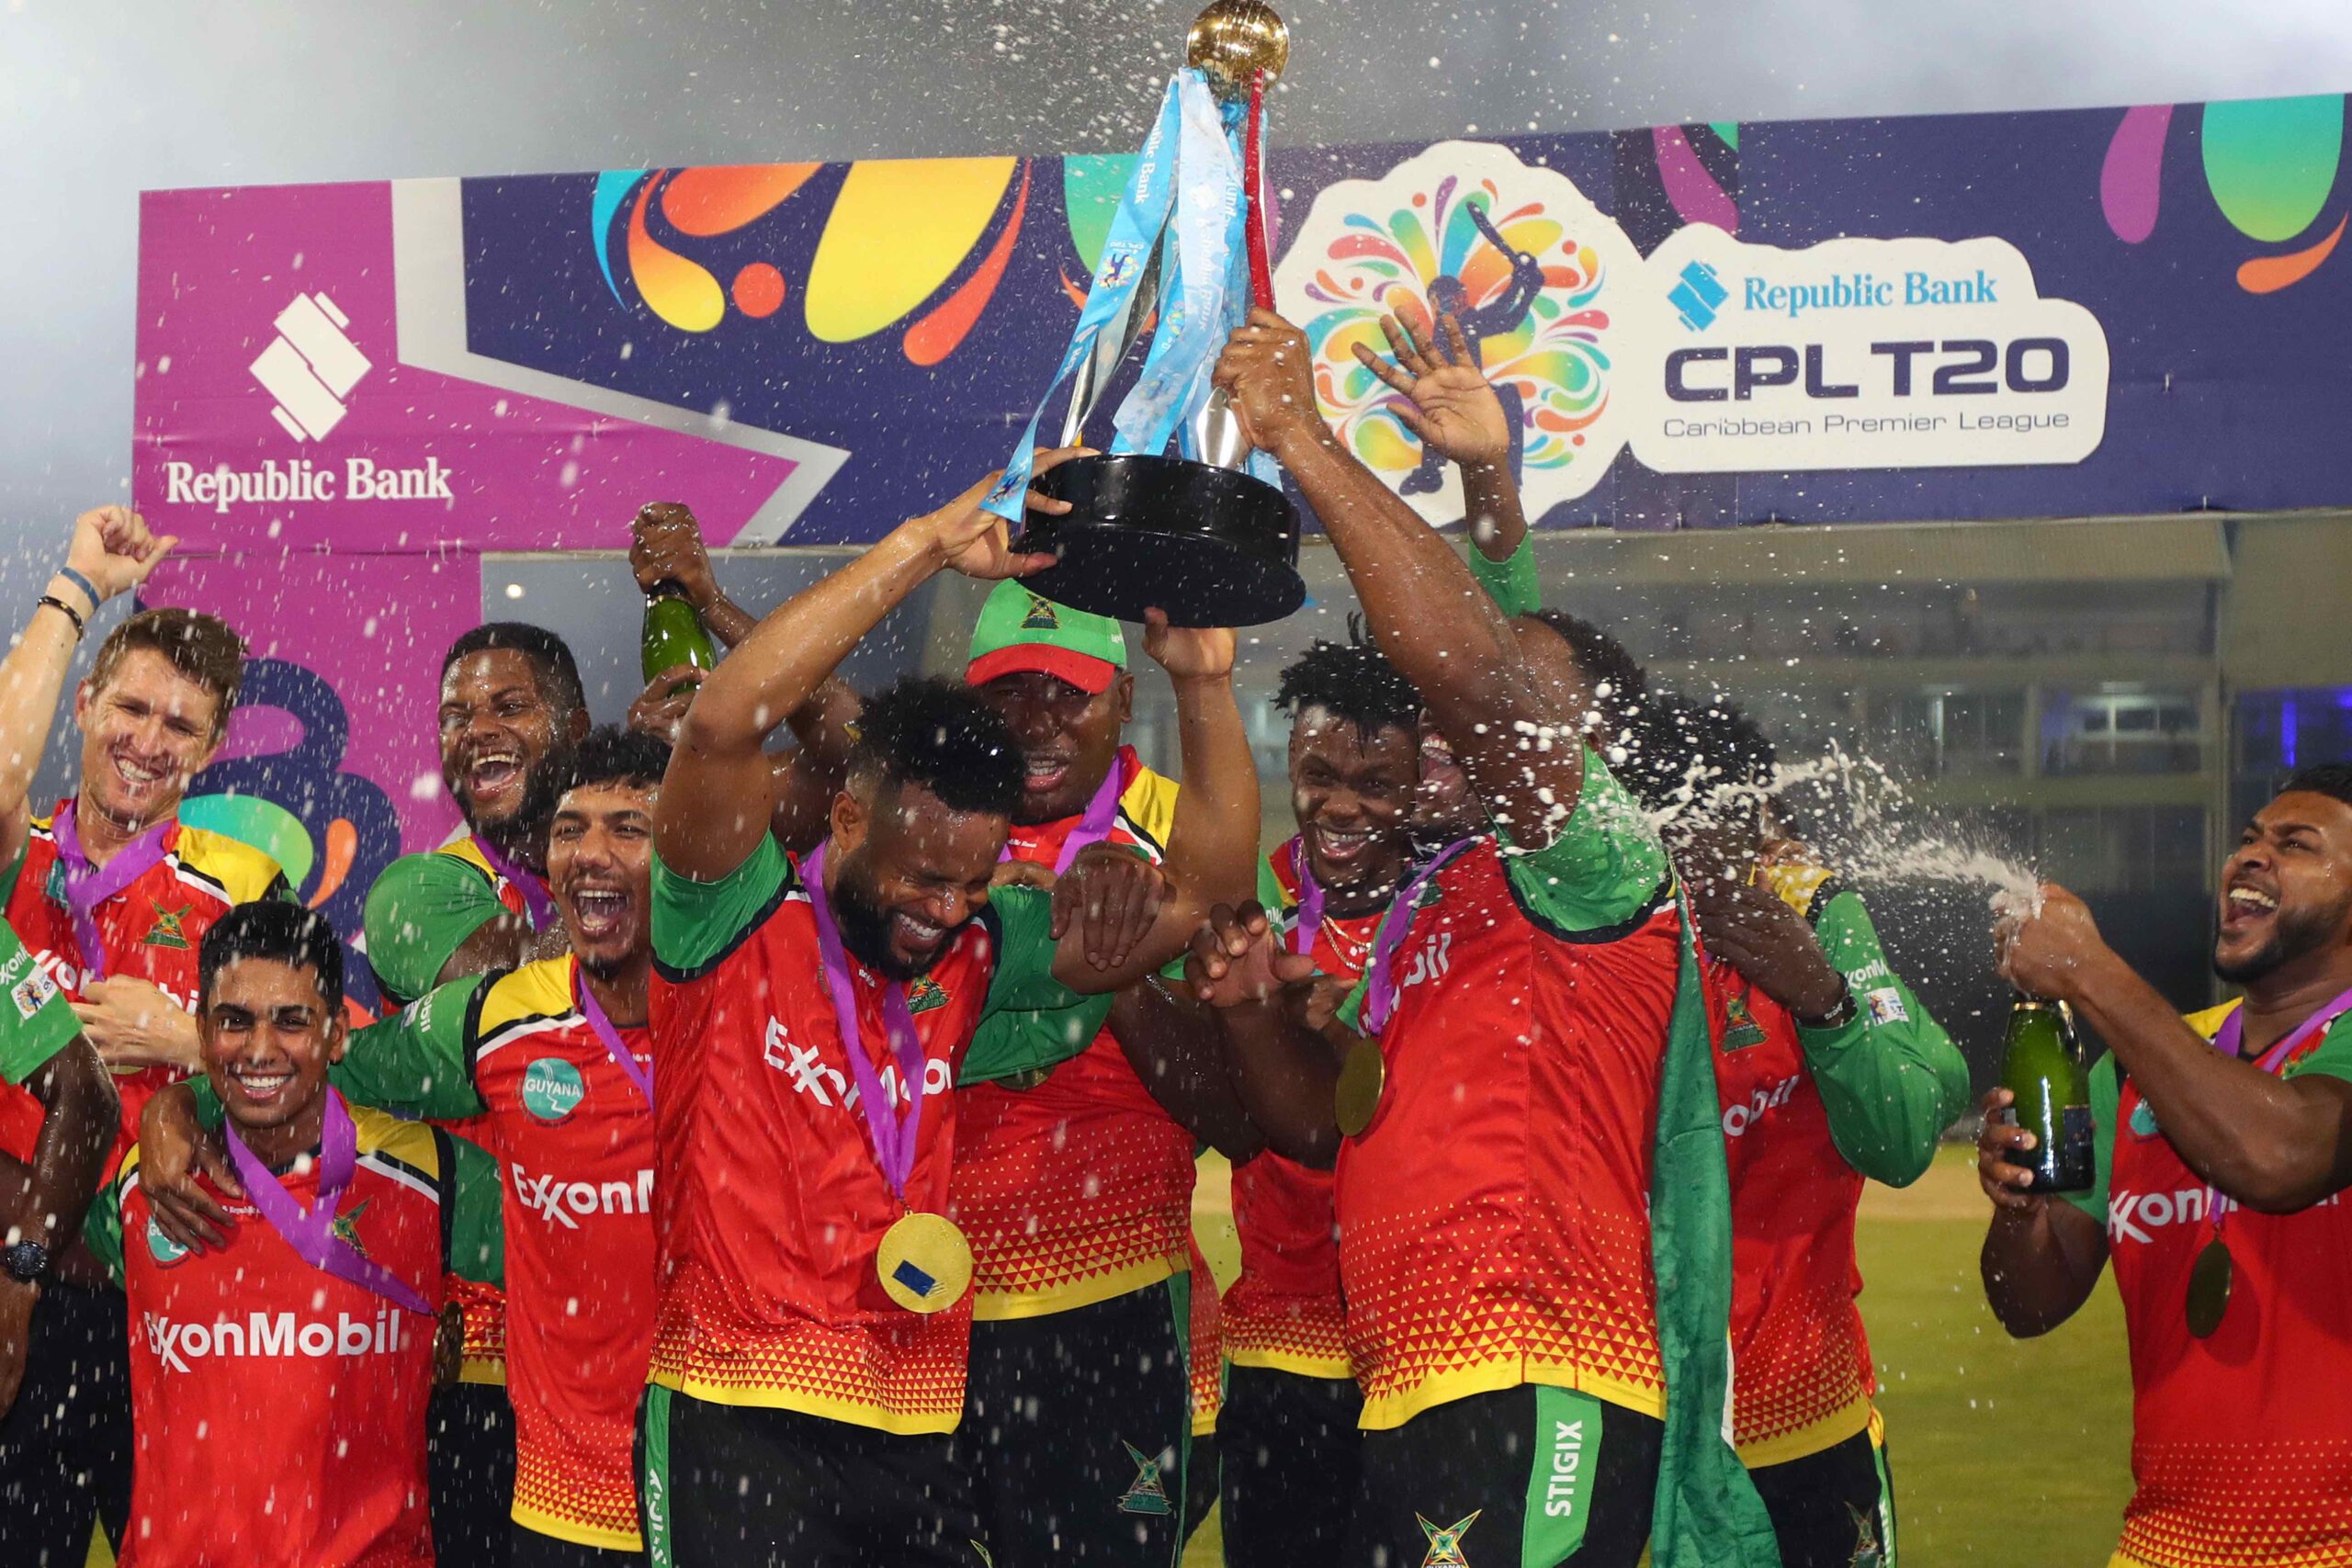 President Dr. Kishore Shallow Congratulates Guyana Amazon Warriors on being the Caribbean Premier League Champions